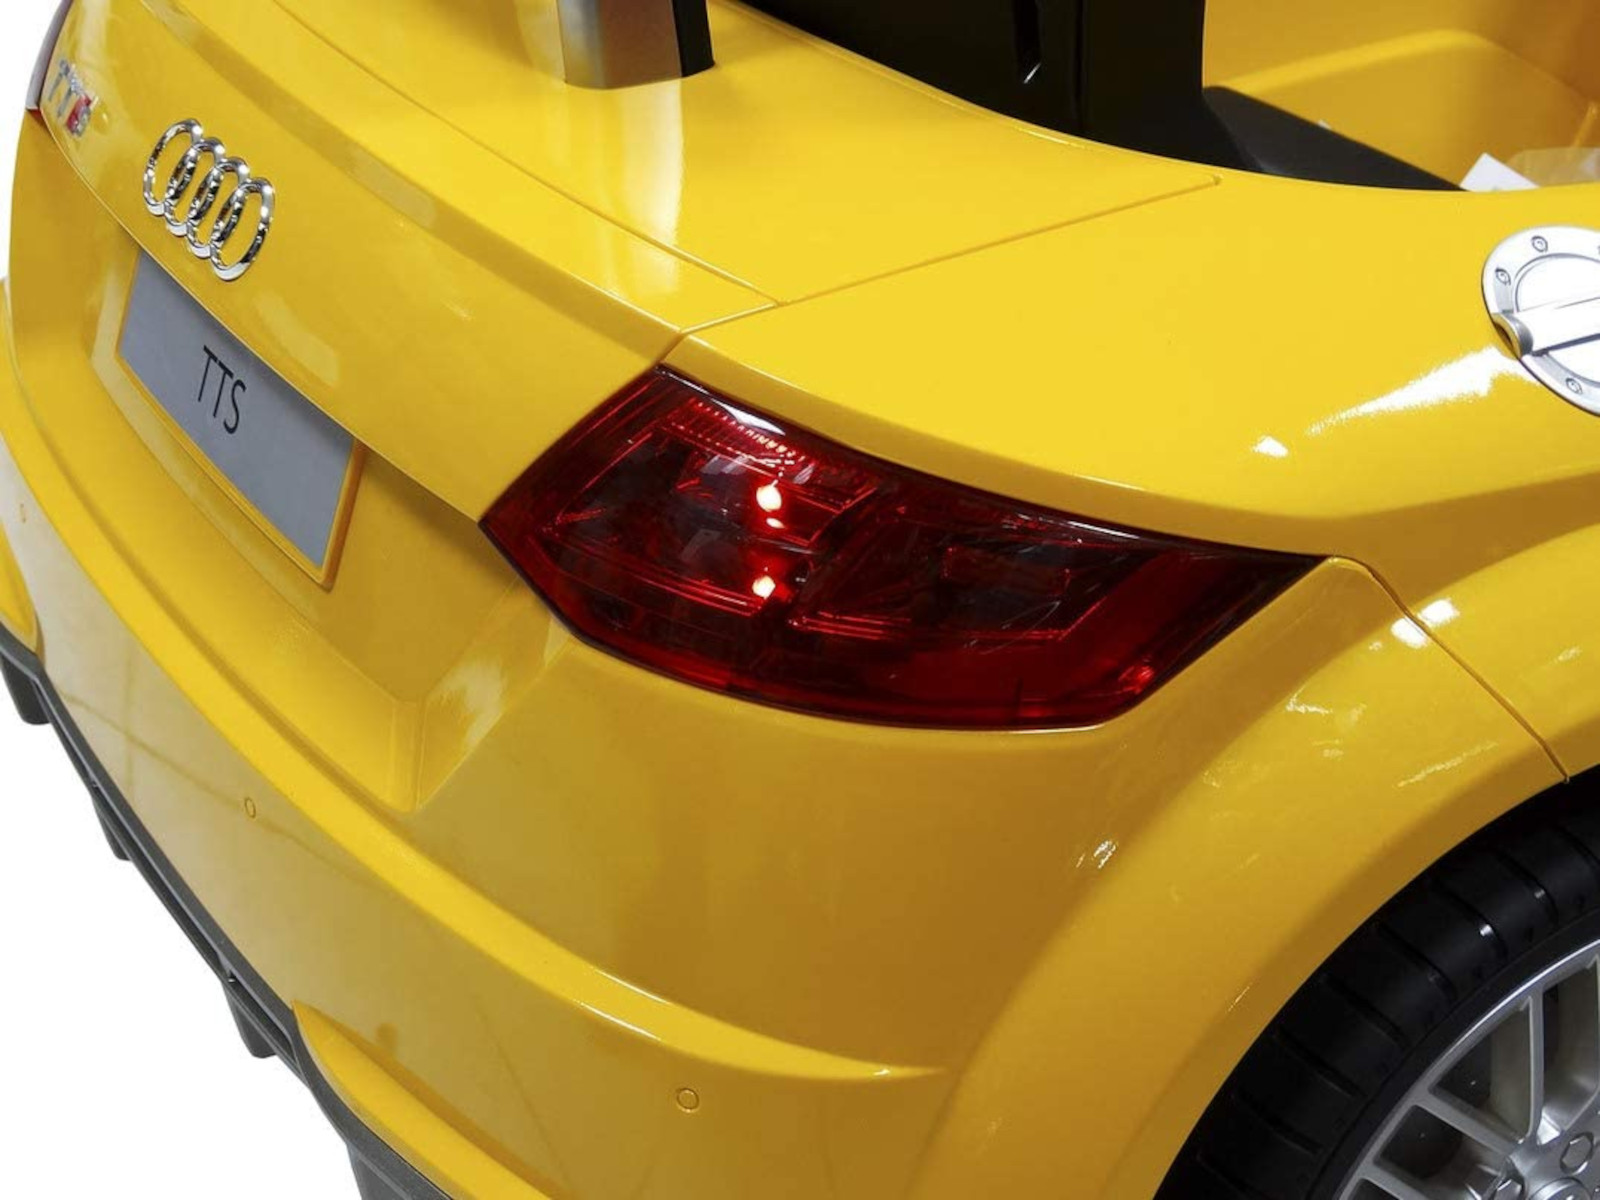 Spielzeugfahrzeug Audi für Elektroauto Kinder TTS RASTAR Roadster Ride-On (gelb) -